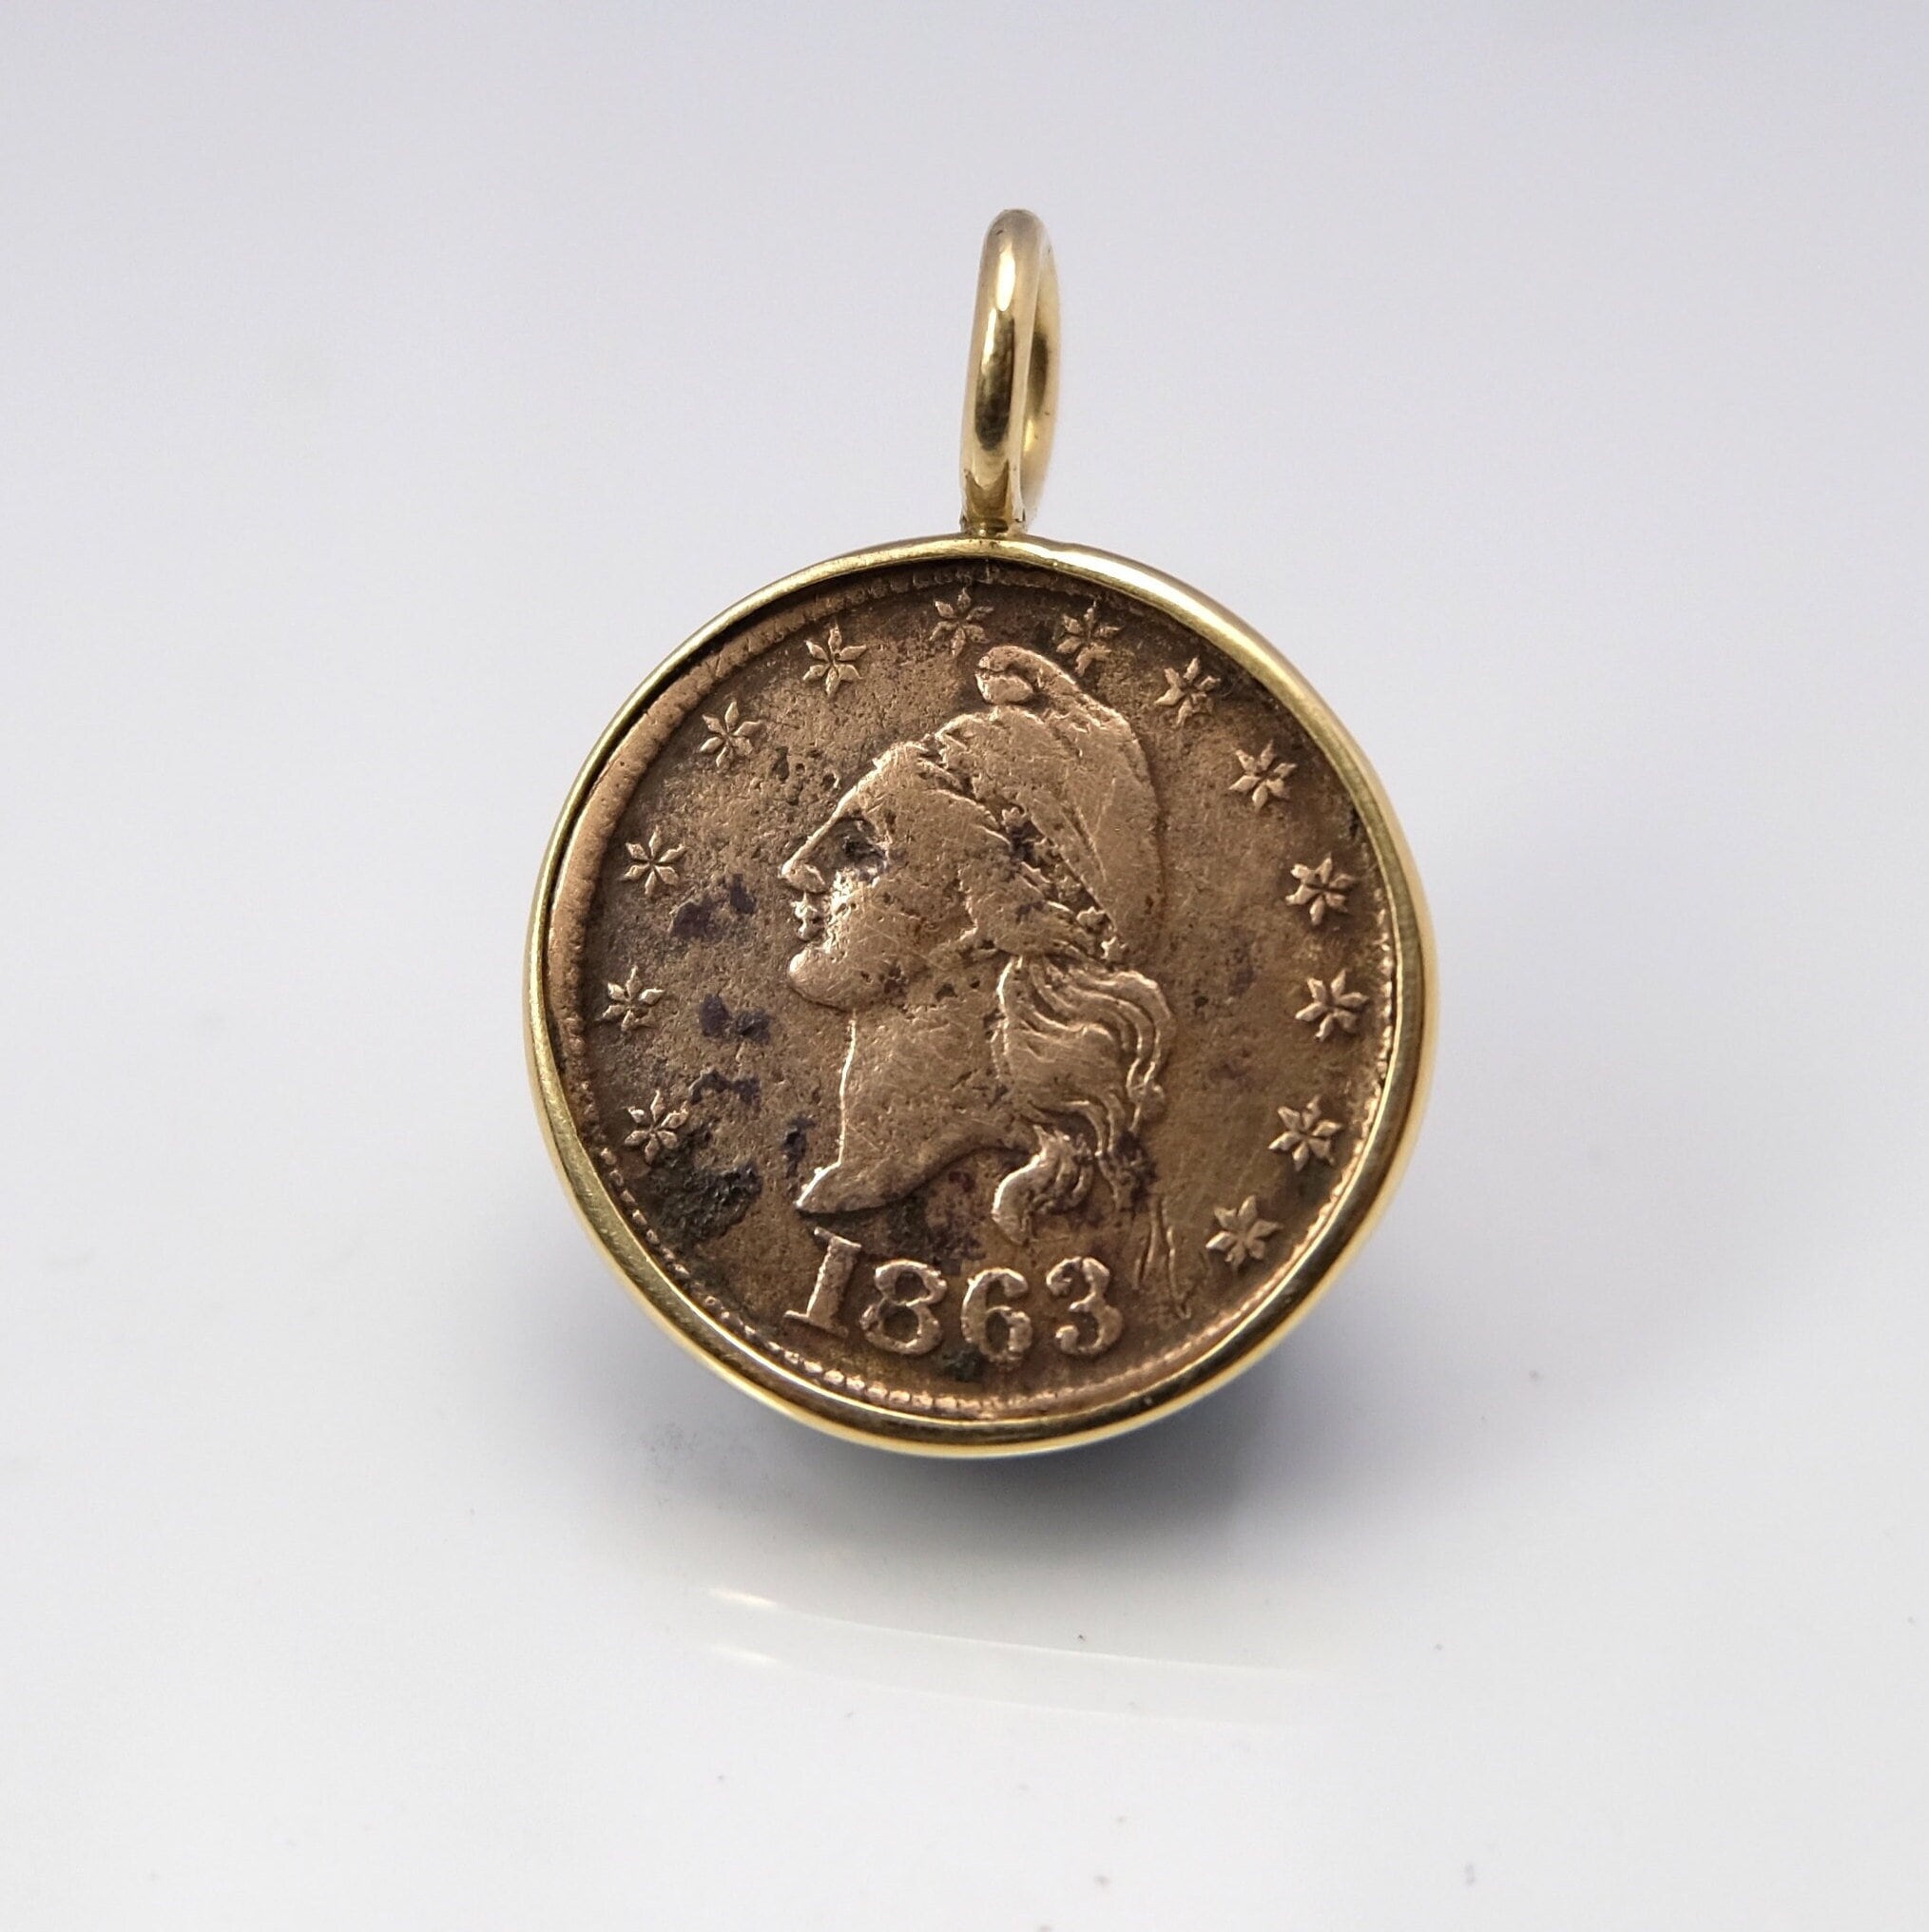 1863 Civil War Token I.O.U 1 Cent - Free Shipping USA - The Happy Coin